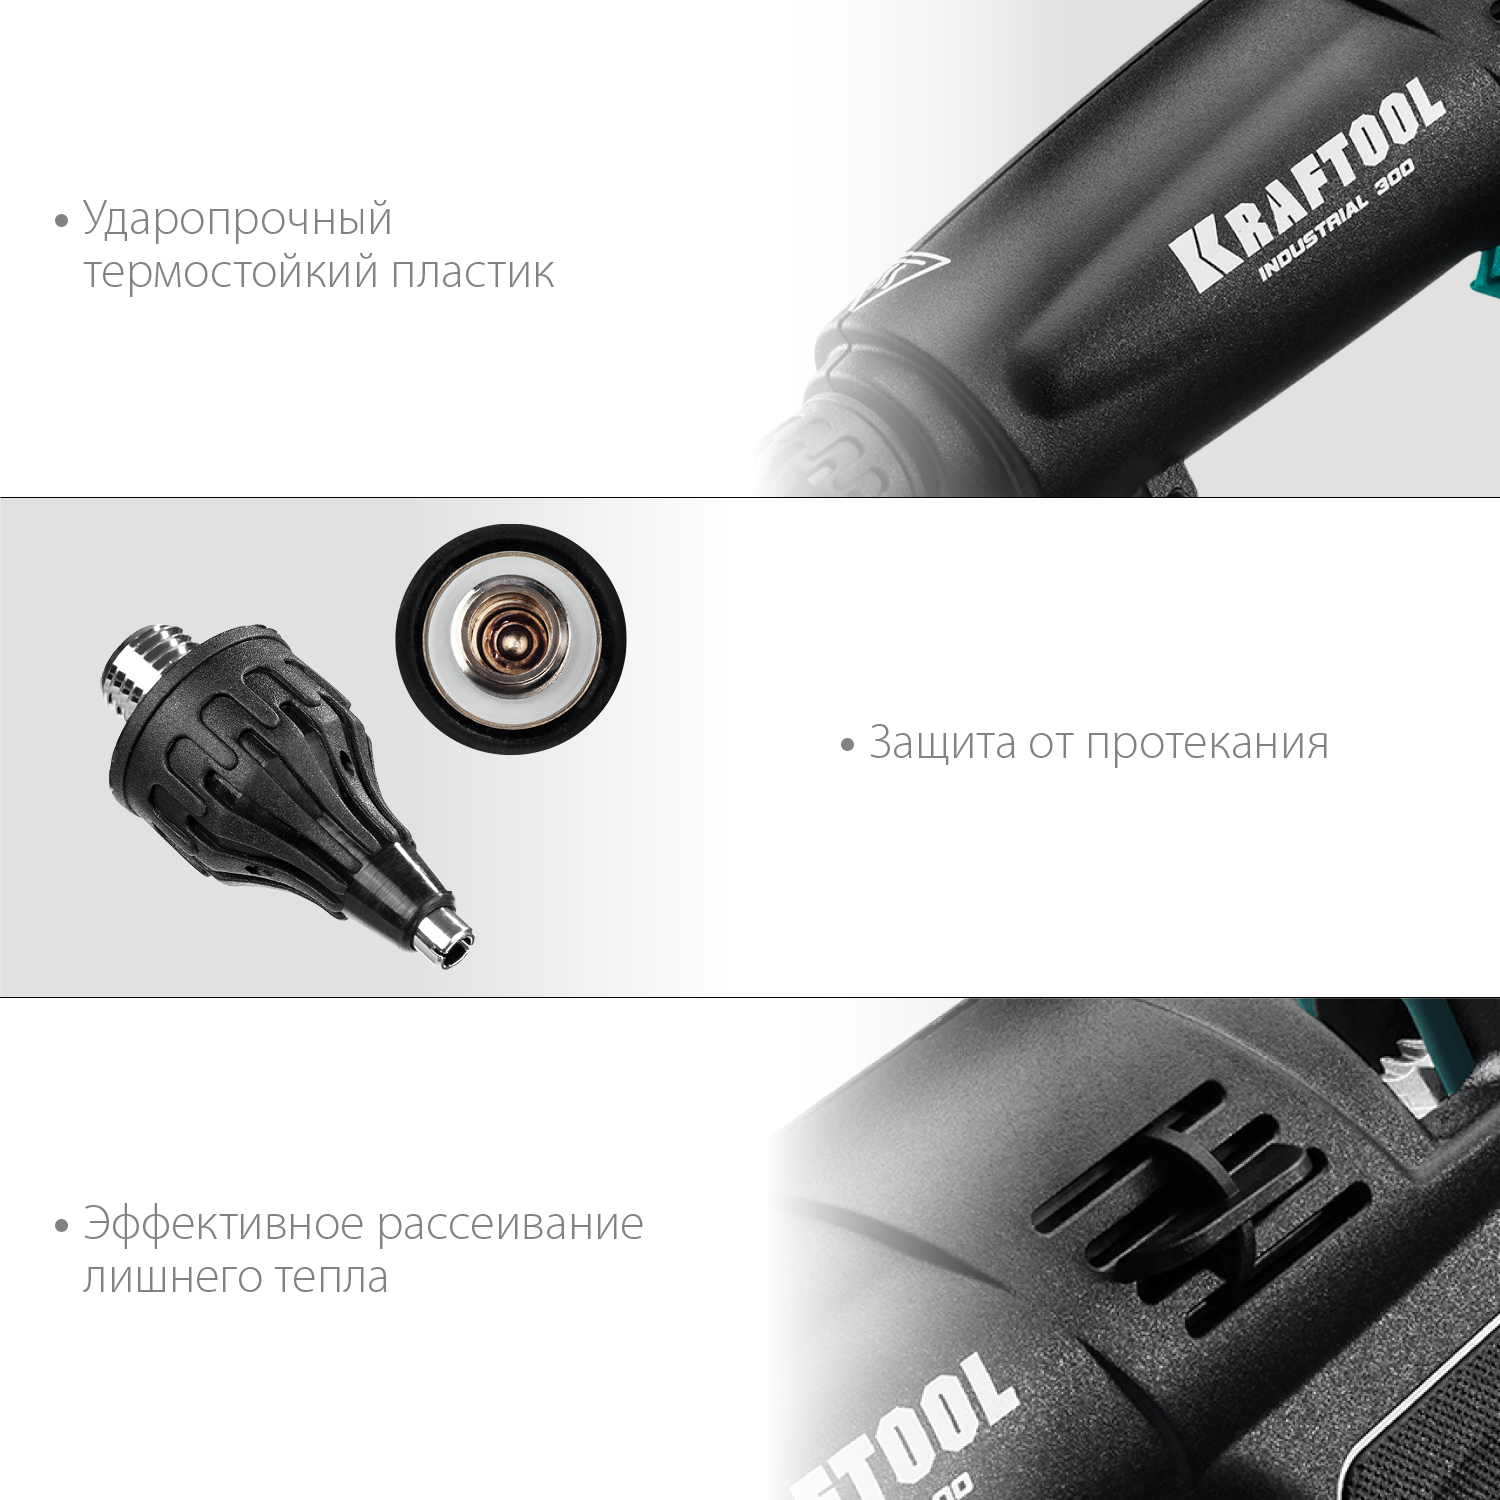 KRAFTOOL Industrial 300, d 11 - 12 мм, 45 г/мин, электрический термоклеевой пистолет (06842)